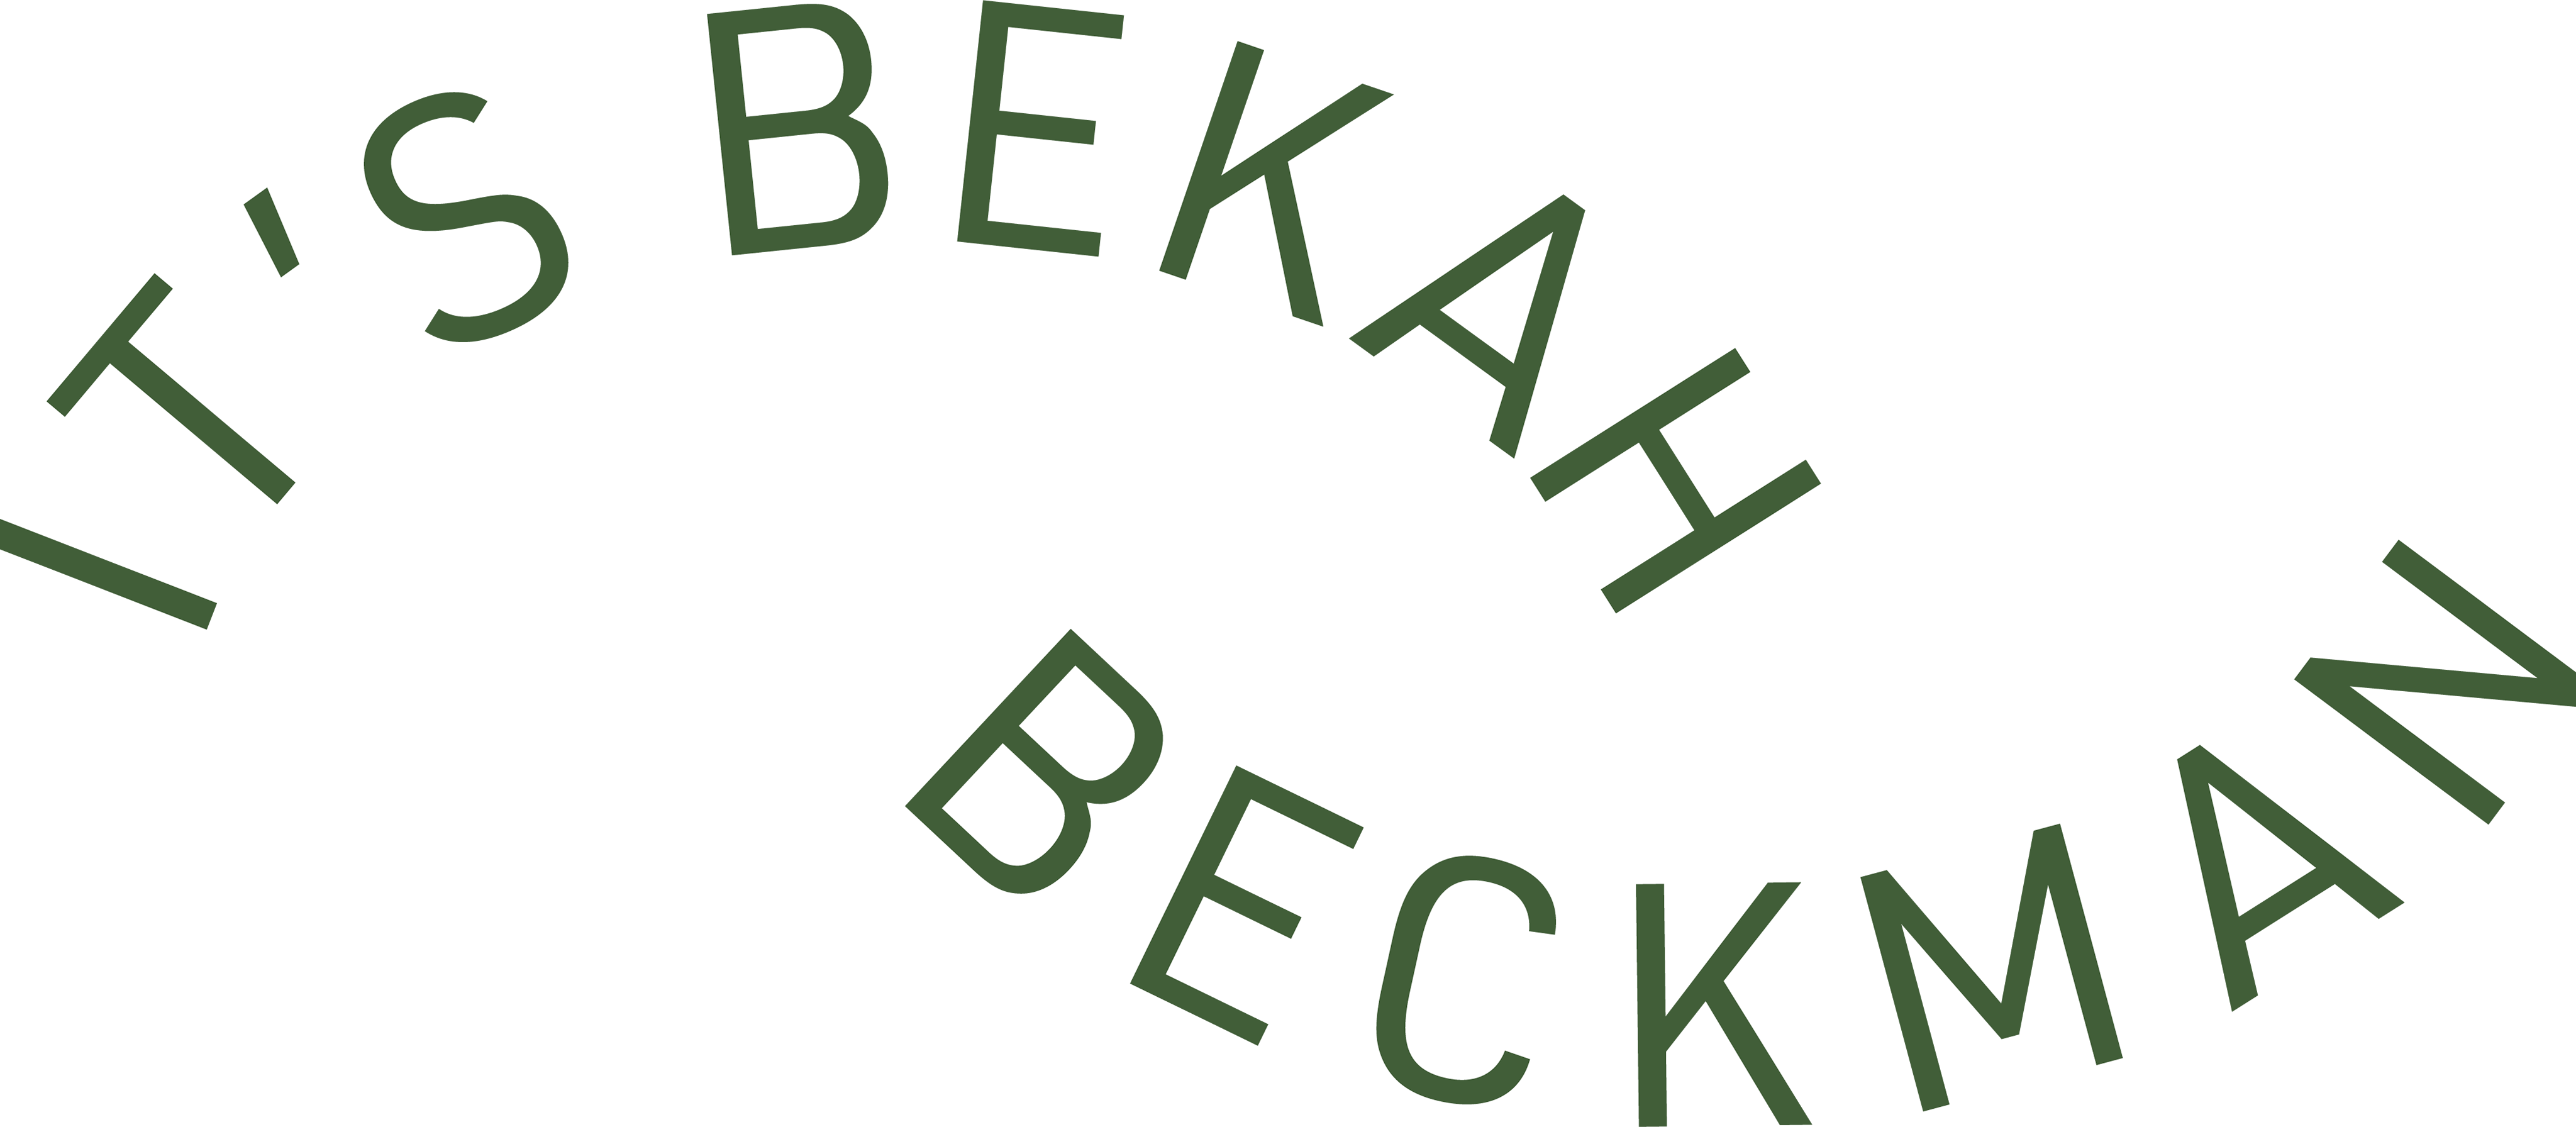 Bekah Beckman